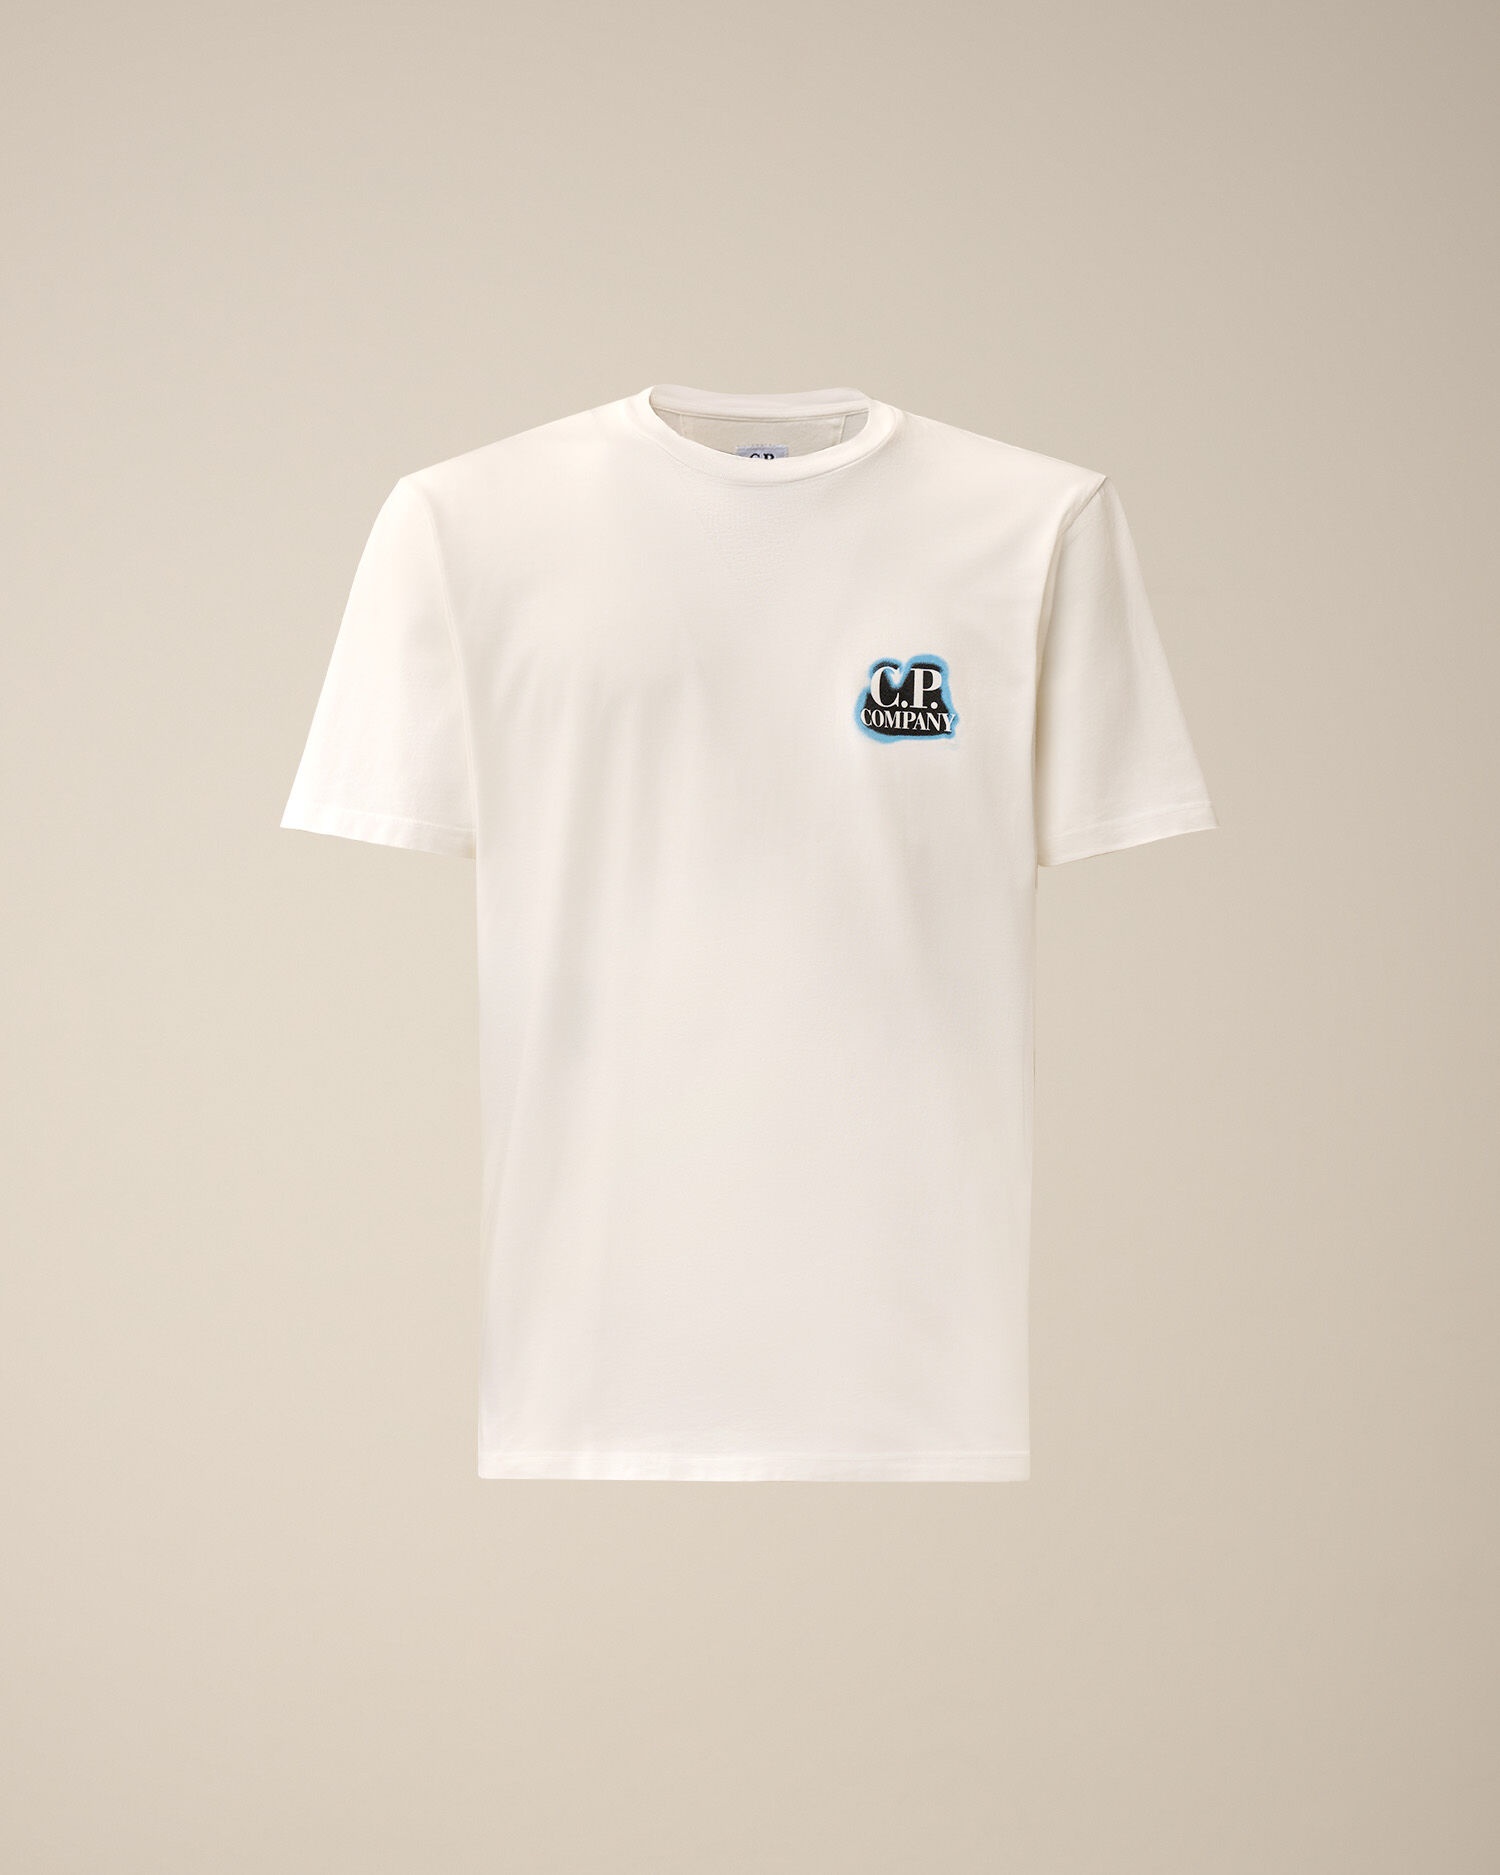 24/1 Jersey Artisanal British Sailor T-shirt - 1